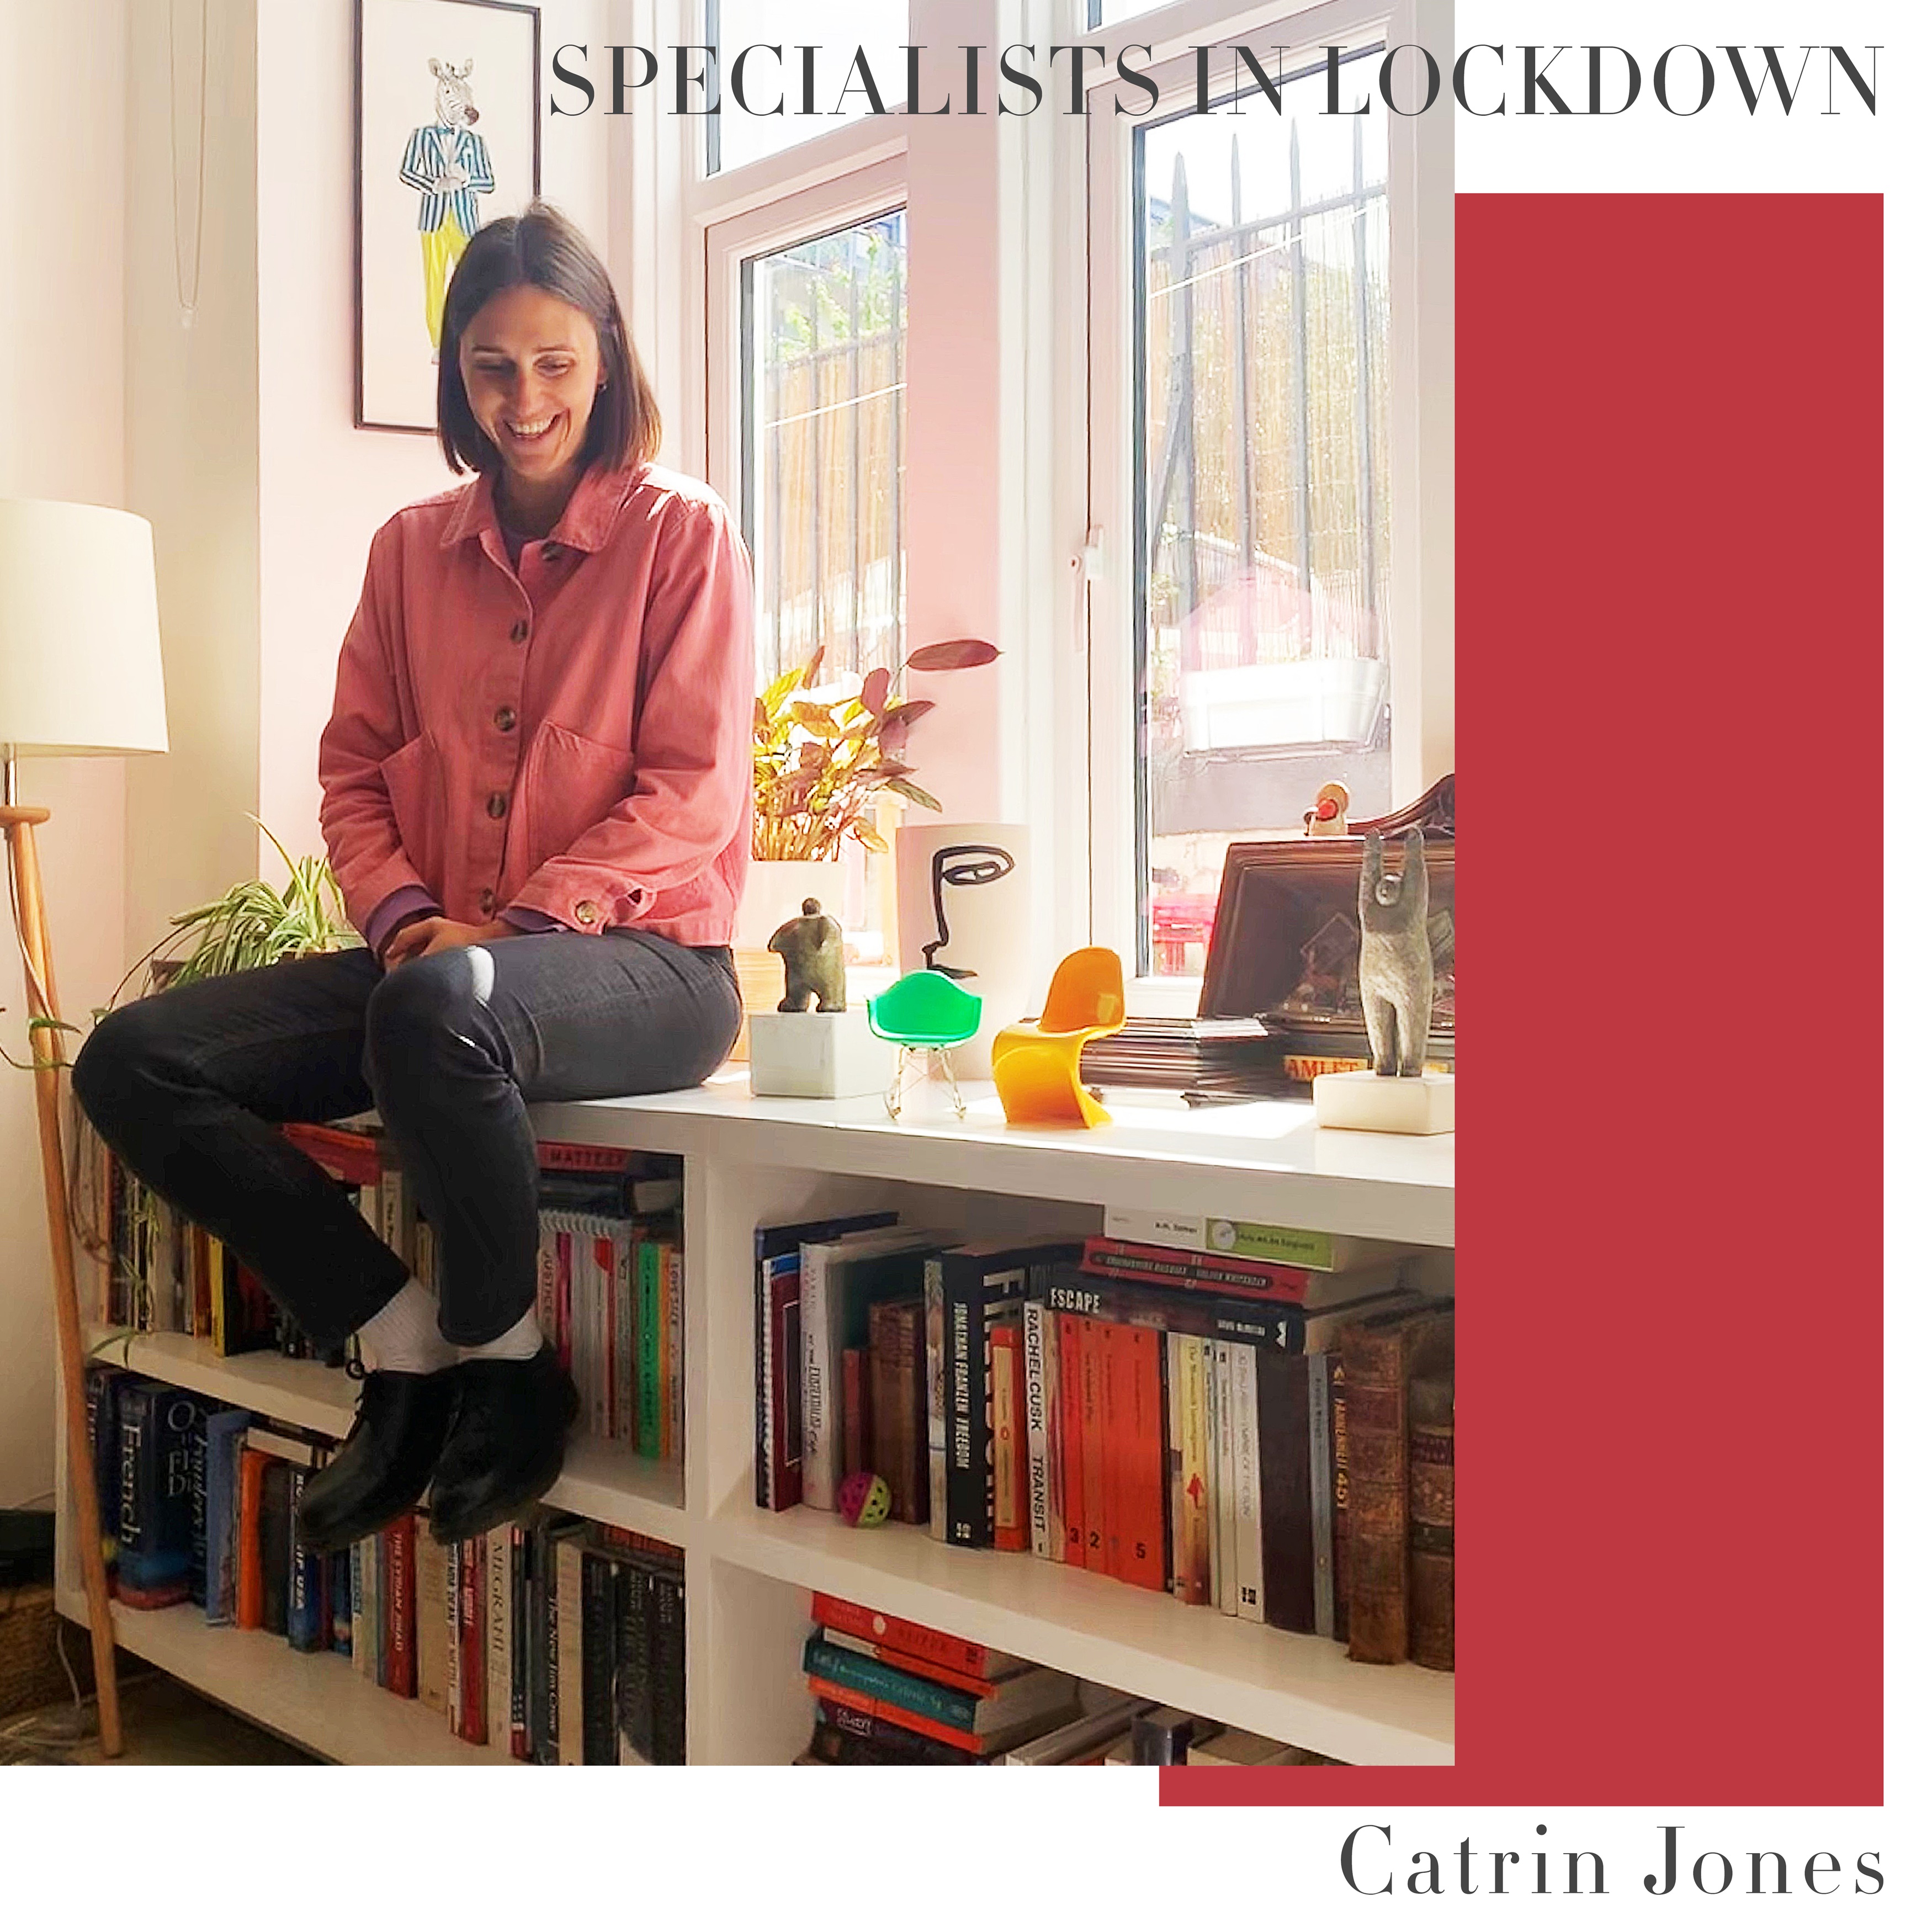 Catrin Jones